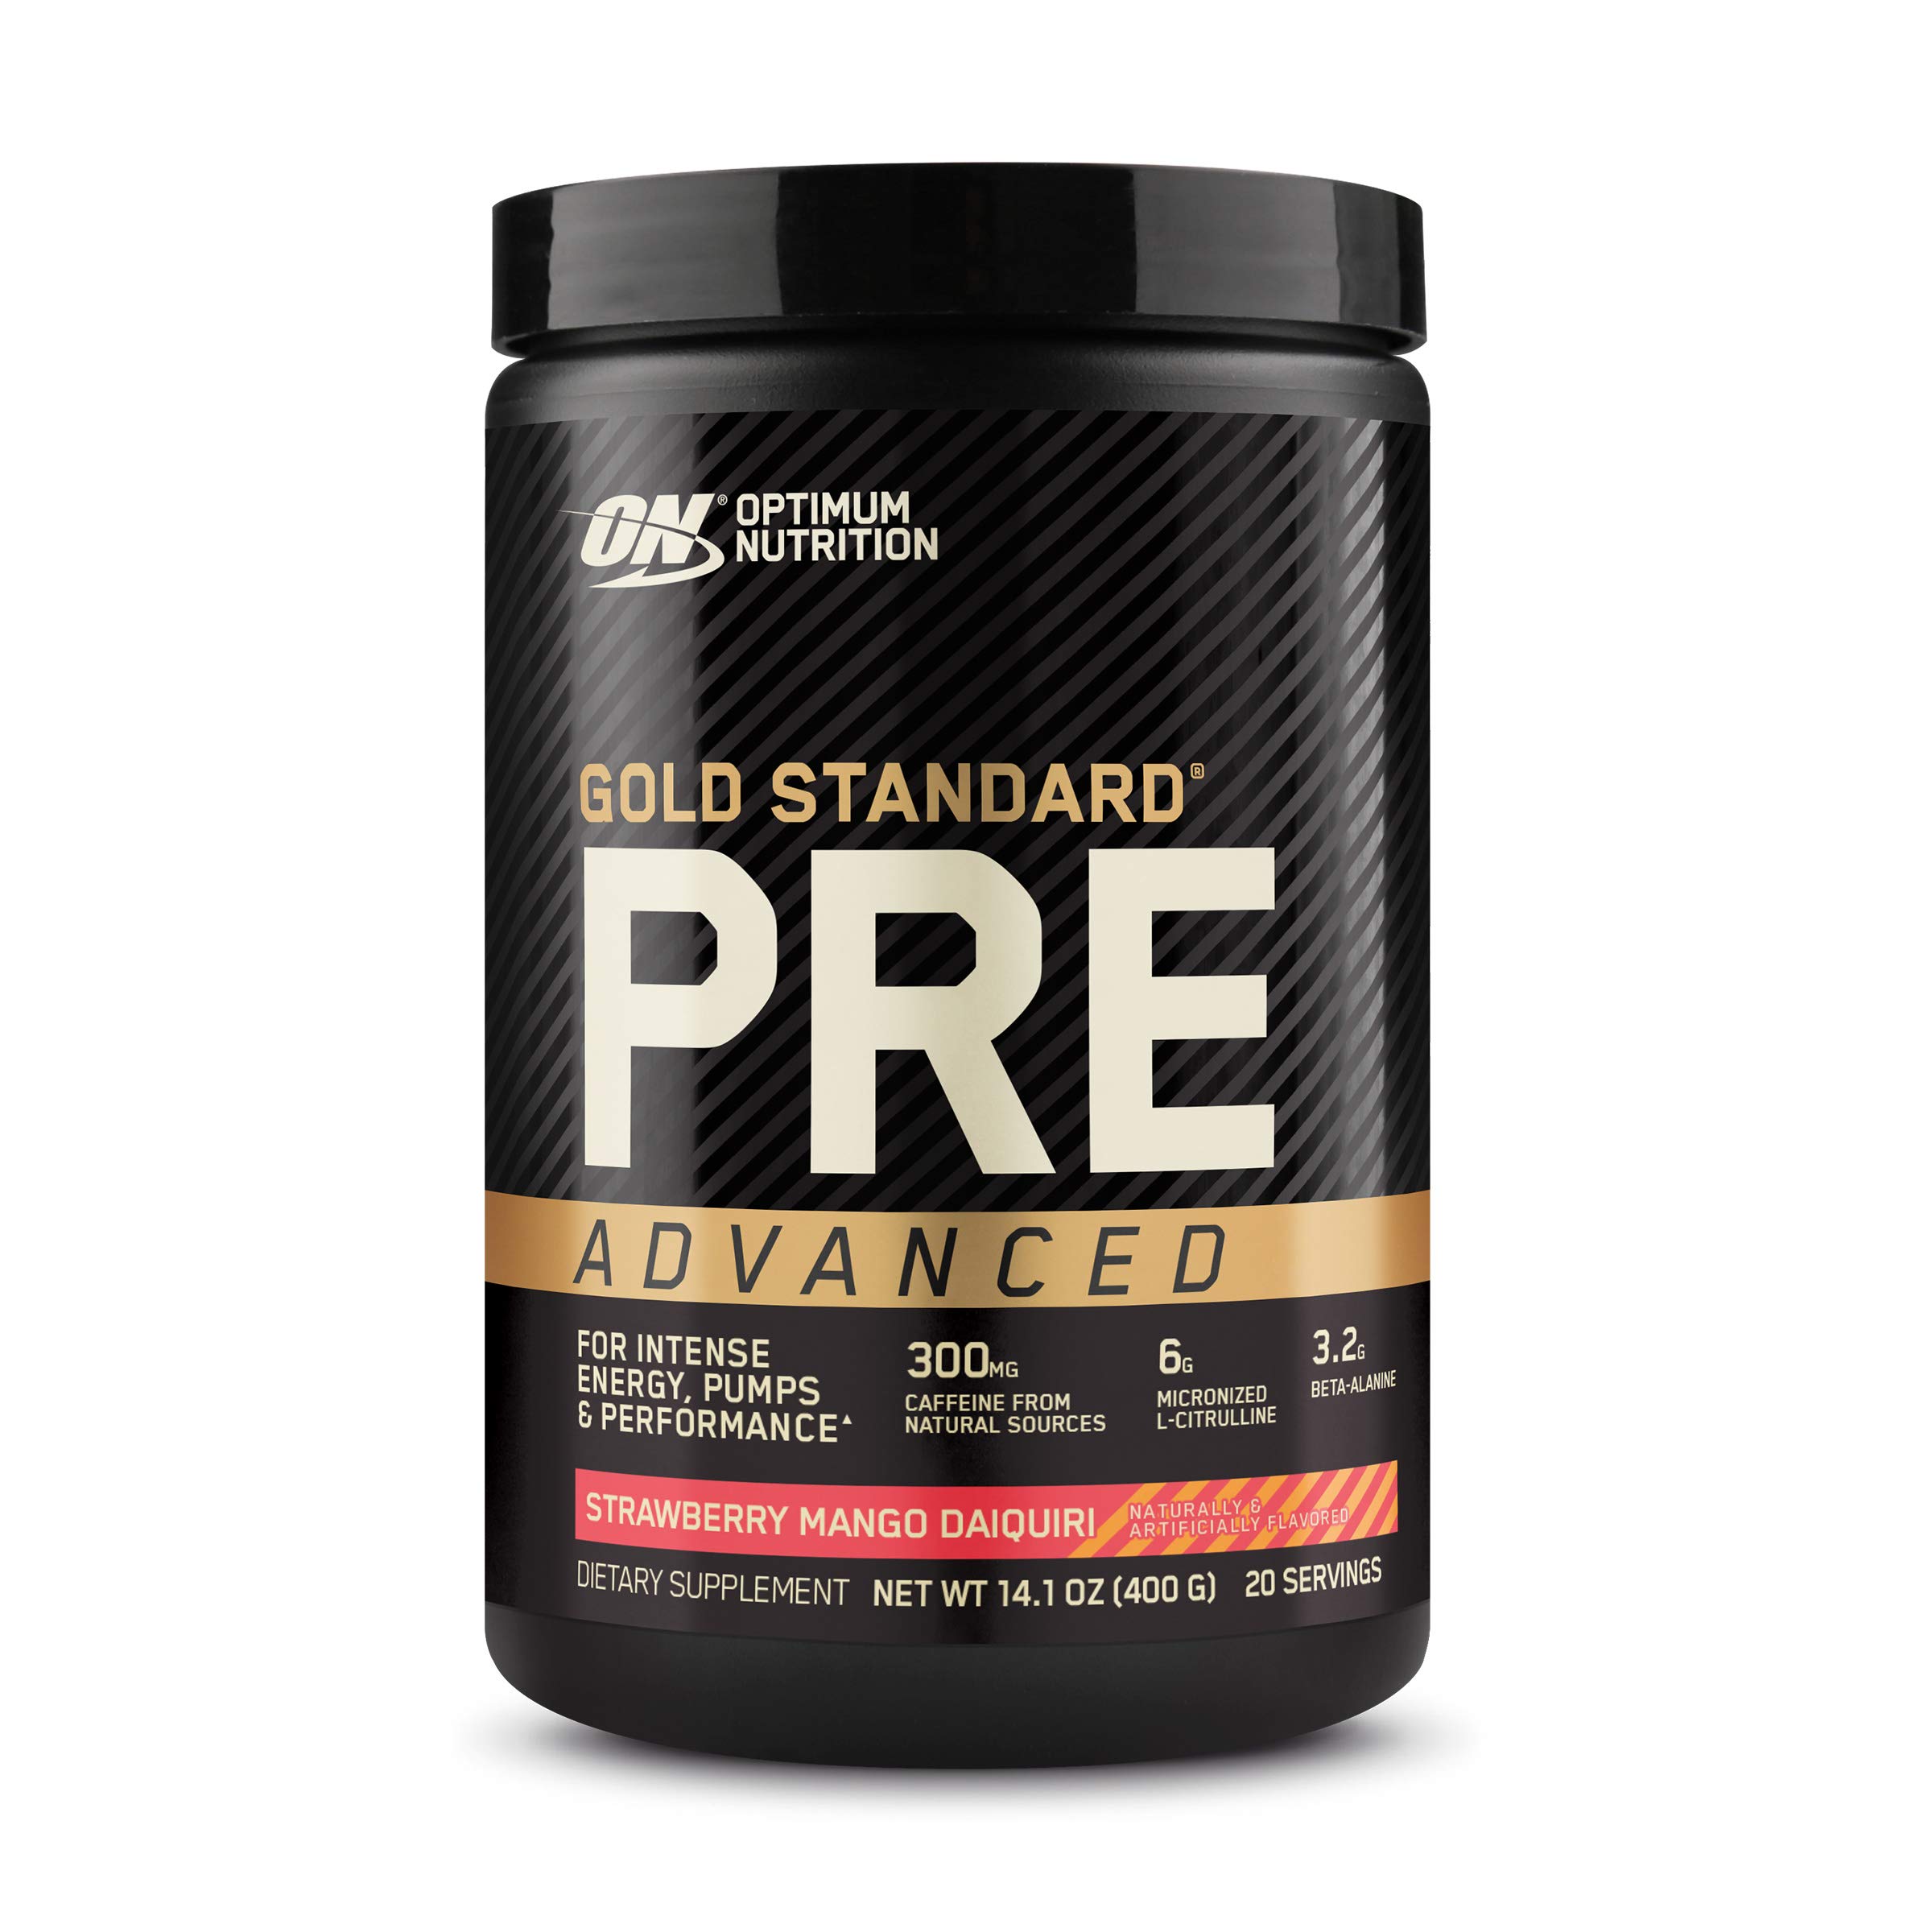 Optimum Nutrition Gold Standard Pre Workout Advanced, with Creatine, Beta-Alanine, Micronized L-Citrulline and Caffeine for Energy, Keto Friendly, Strawberry Mango Daiquiri, 20 Servings